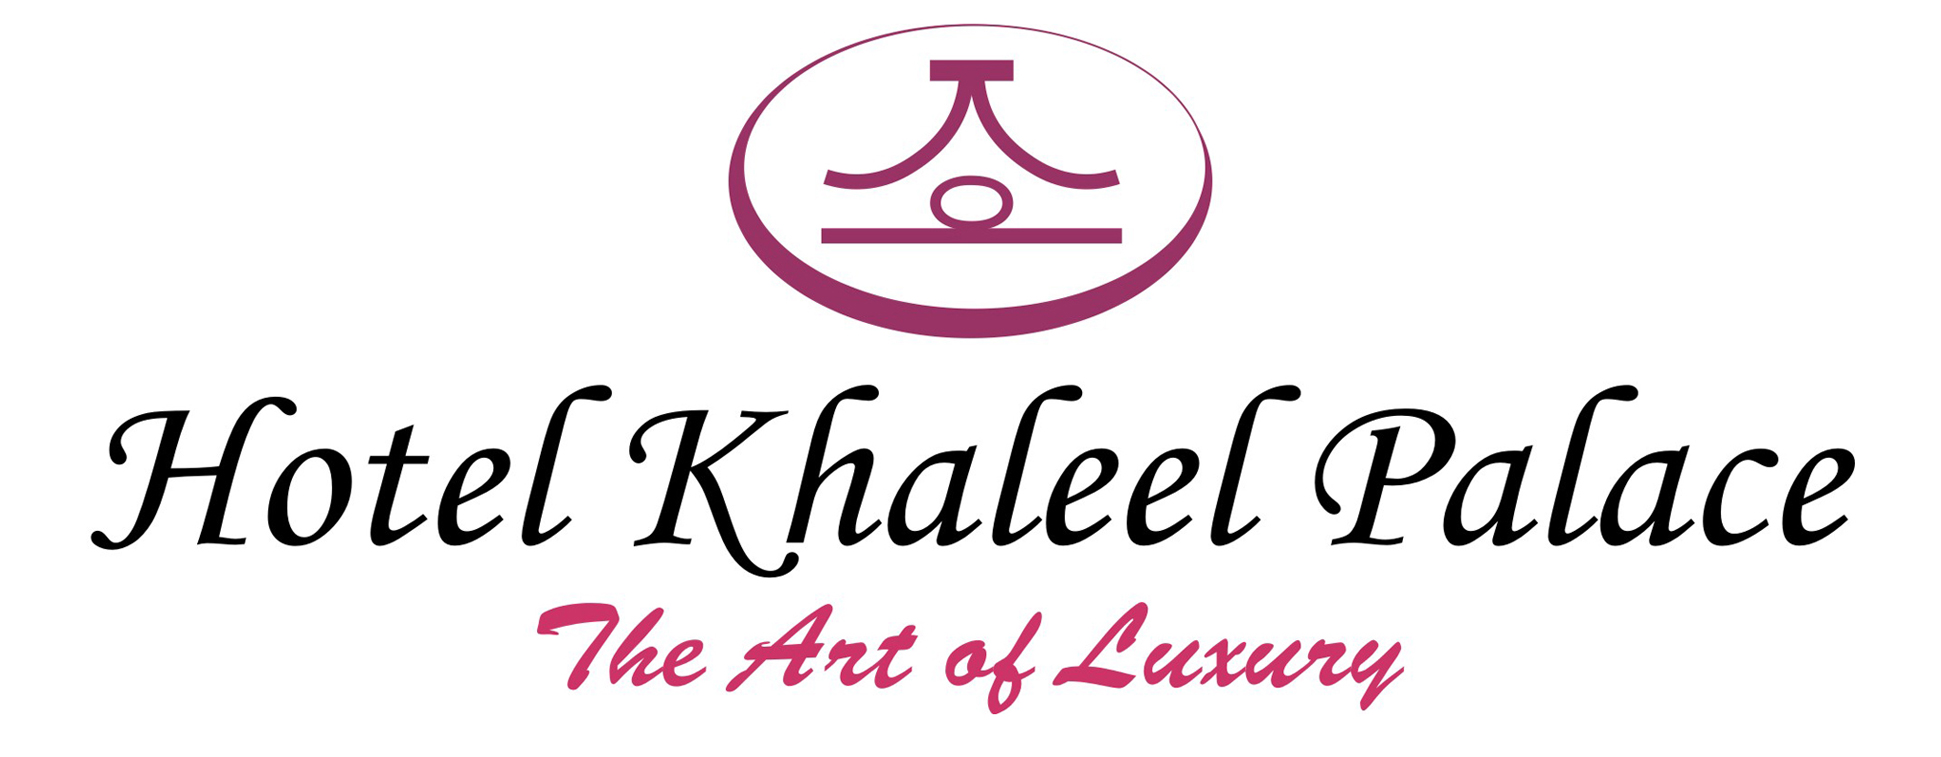 Hotel Khaleel Palace - Logo